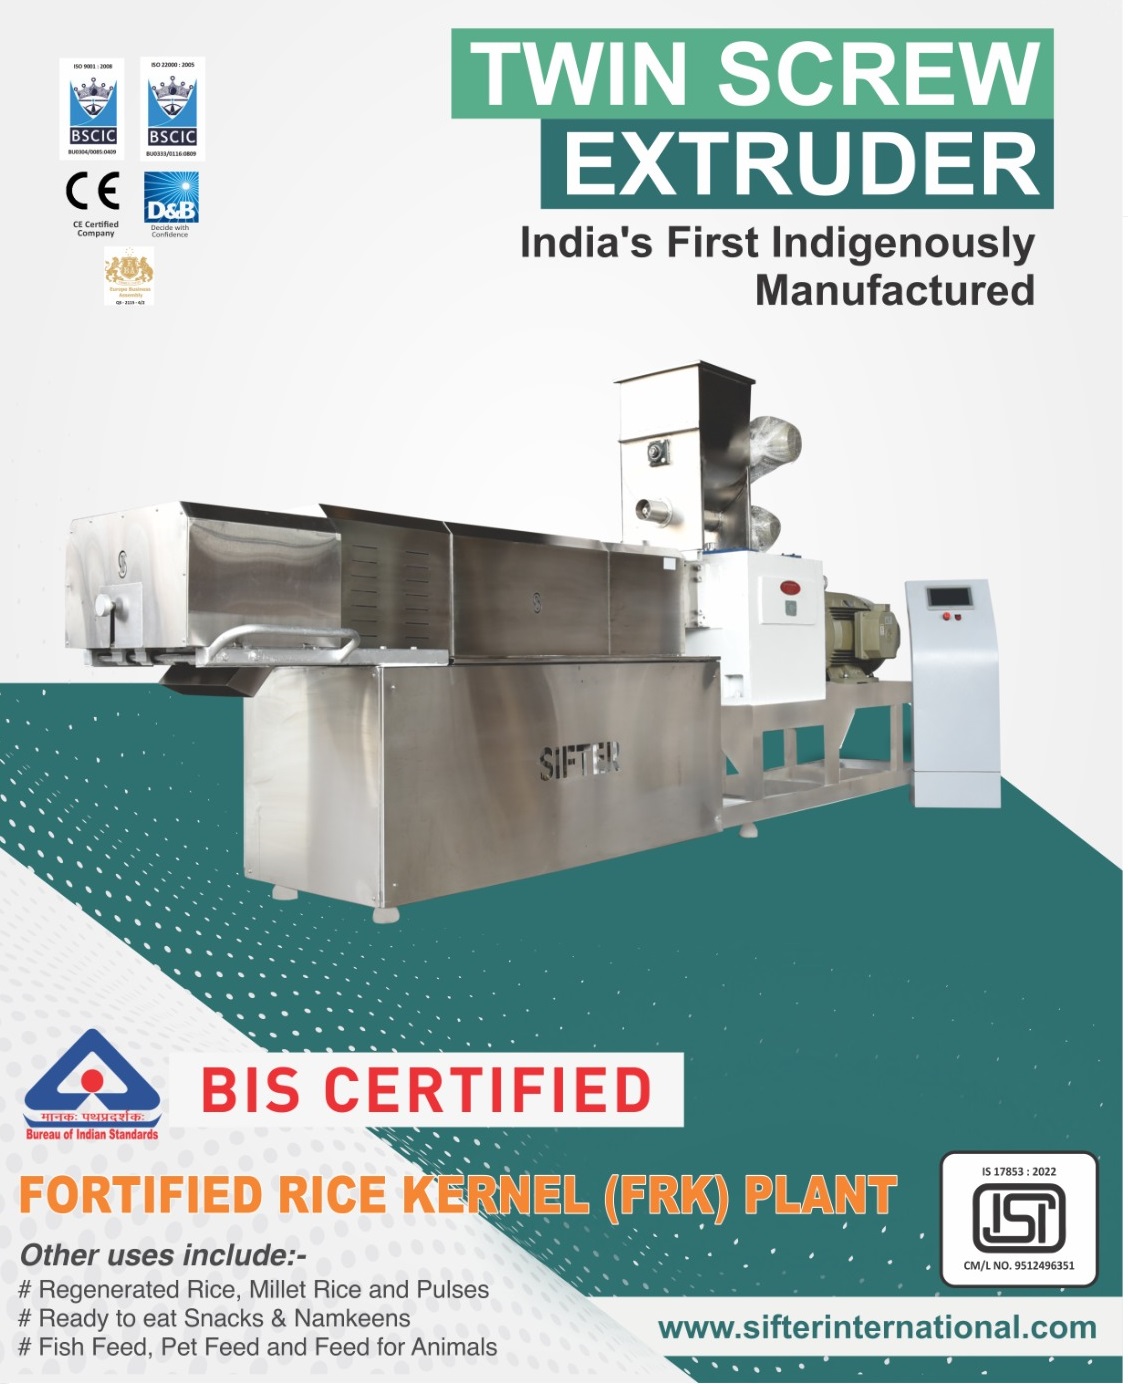 BIS Certified Twin Screw Extruder Manufacturer